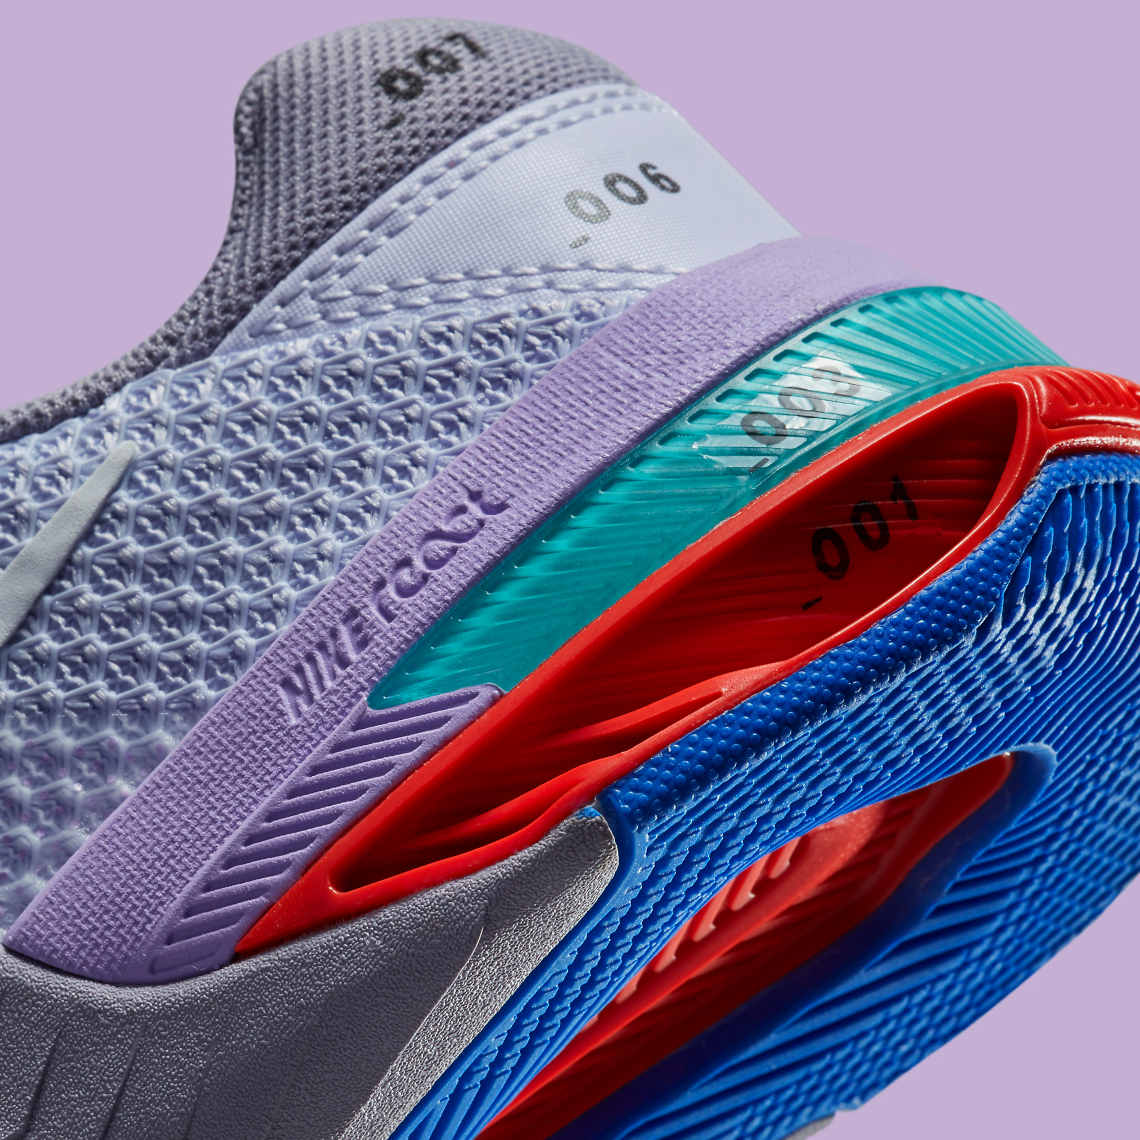 Nike MetCon 7 "Purple"